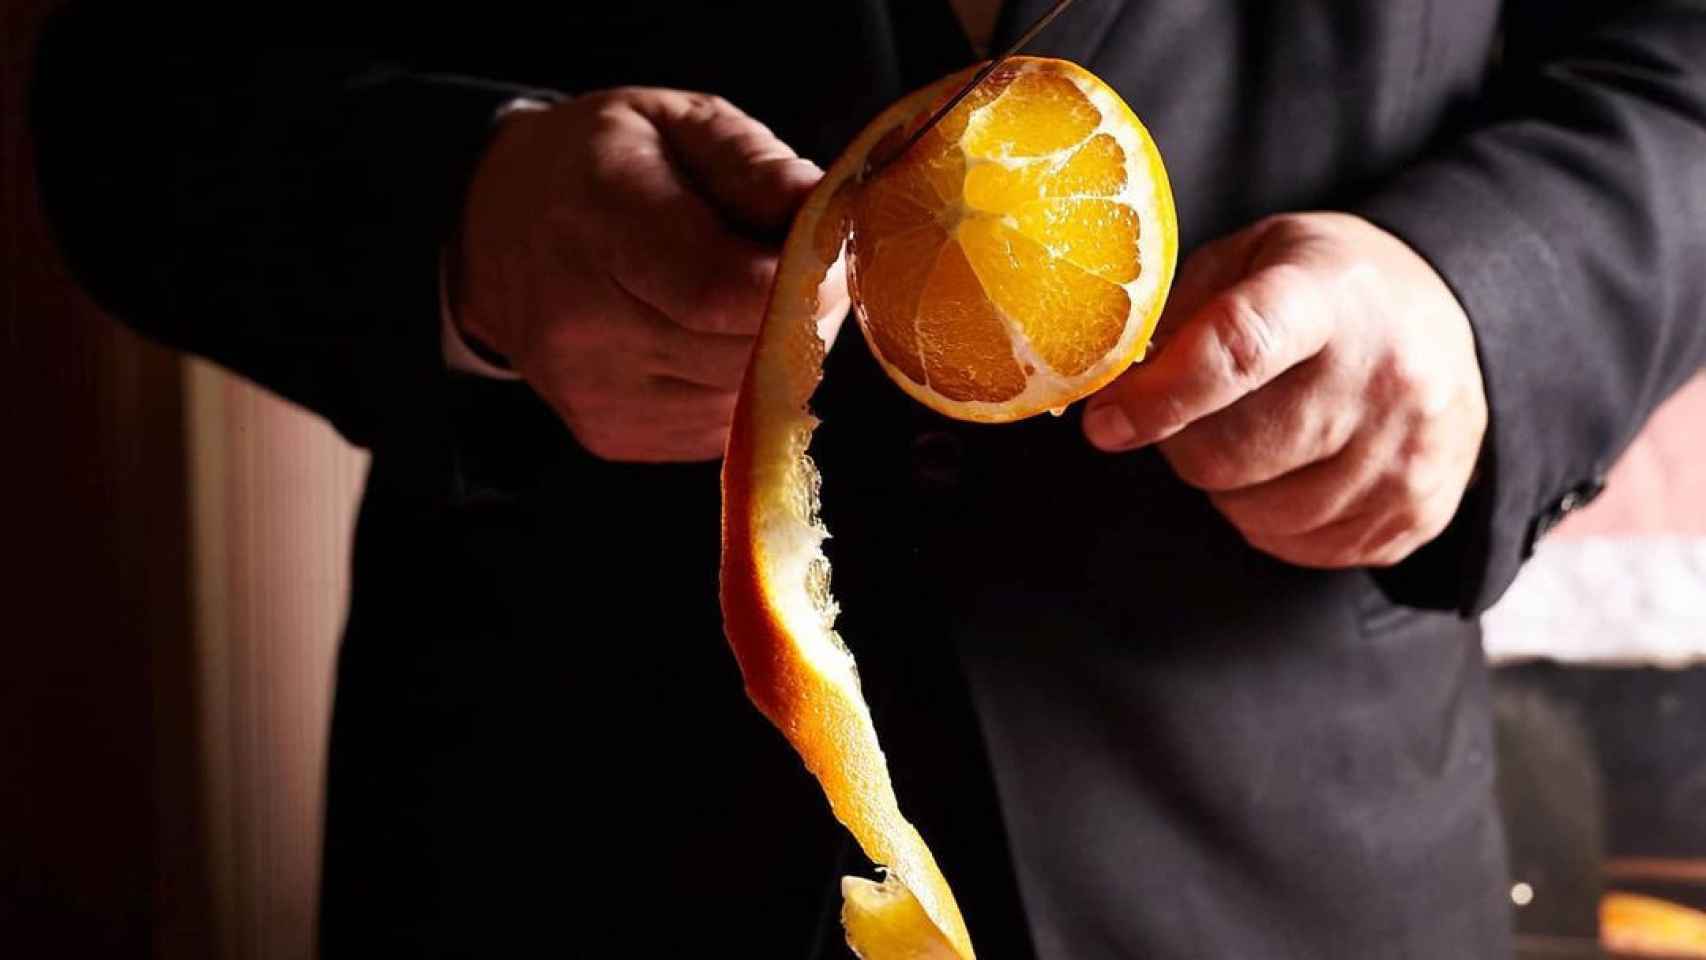 Momento del corte de la naranja del restaurante con una Estrella Michelin de Barcelona, Via Veneto